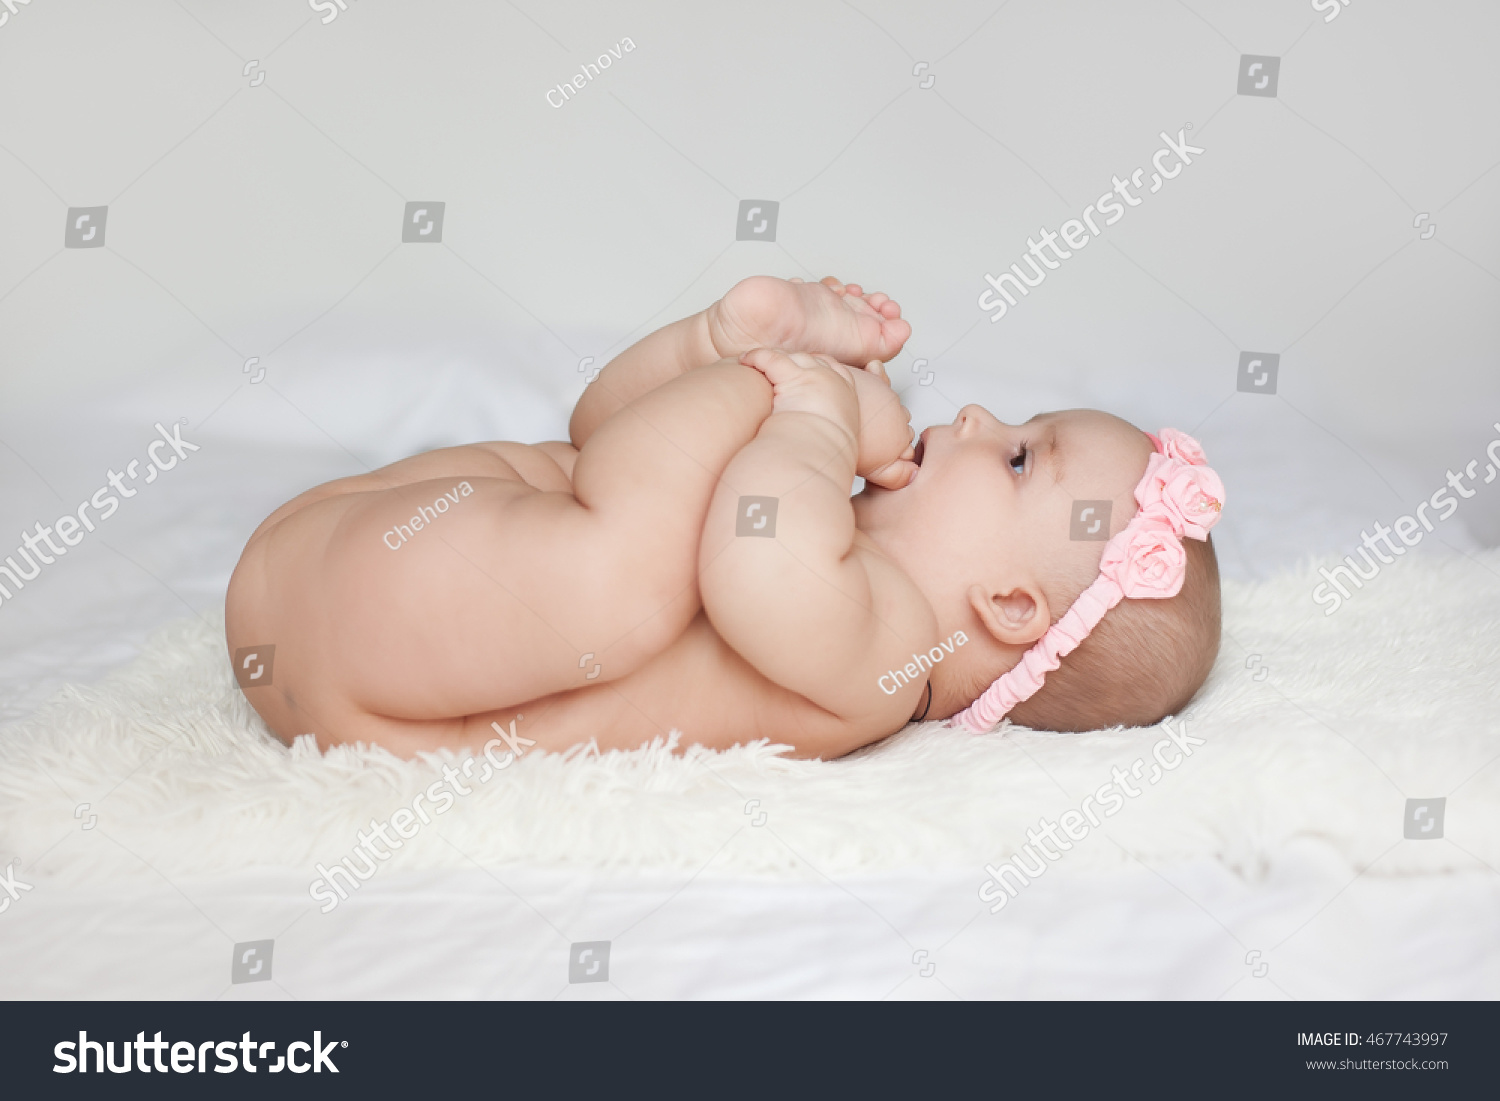 Стоковая фотография 467743997: Naked Baby Girl Chewing On Her Shutterstock.